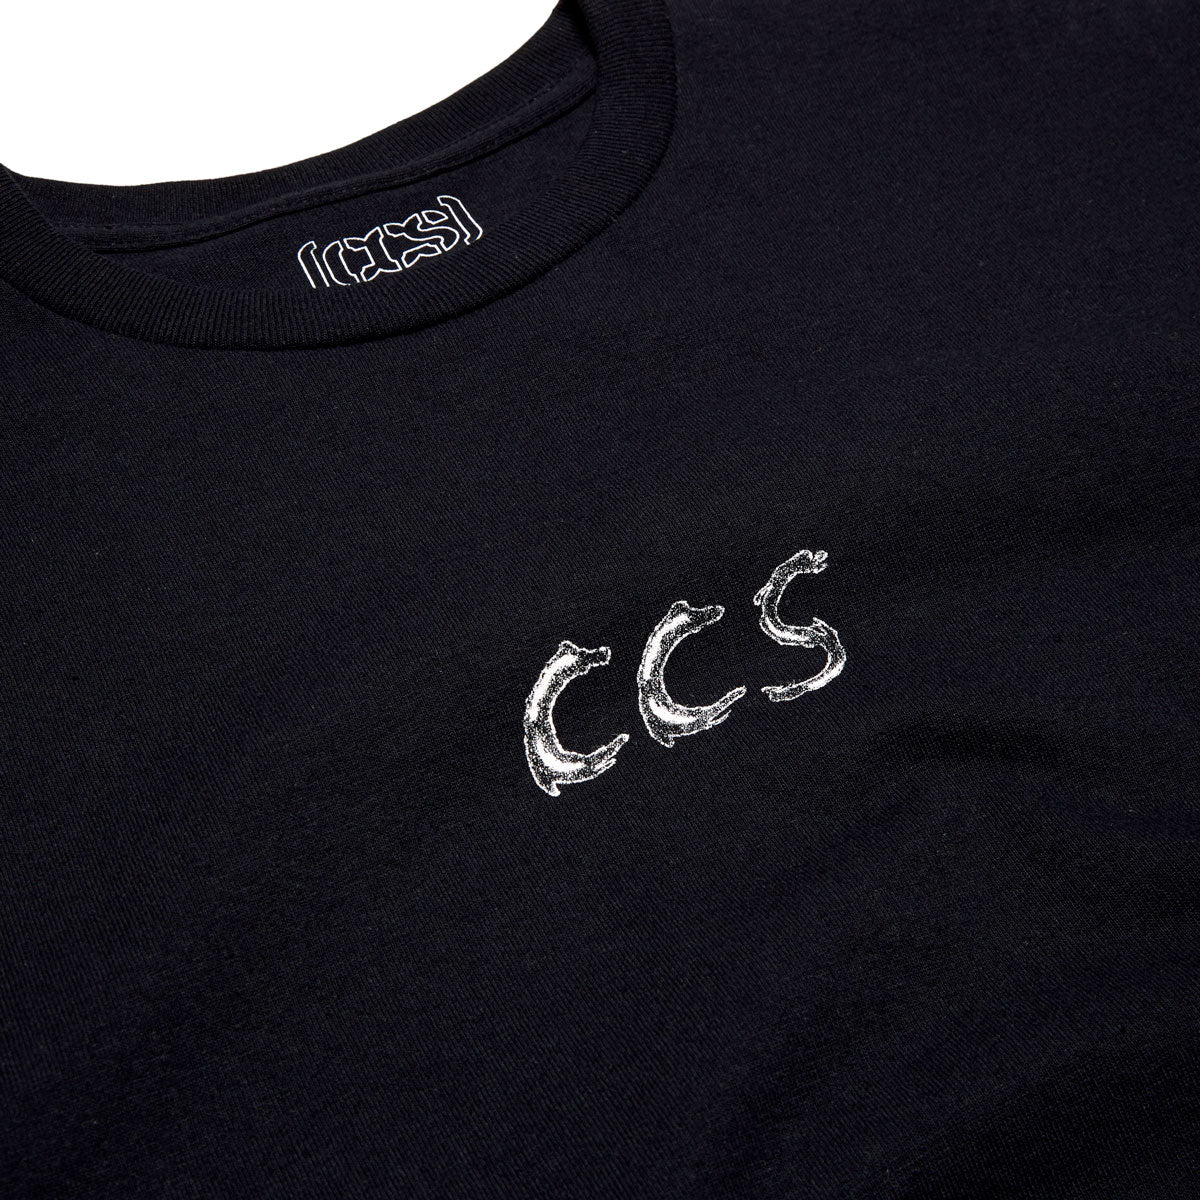 CCS Smile on the Surface T-Shirt - Black/White image 4